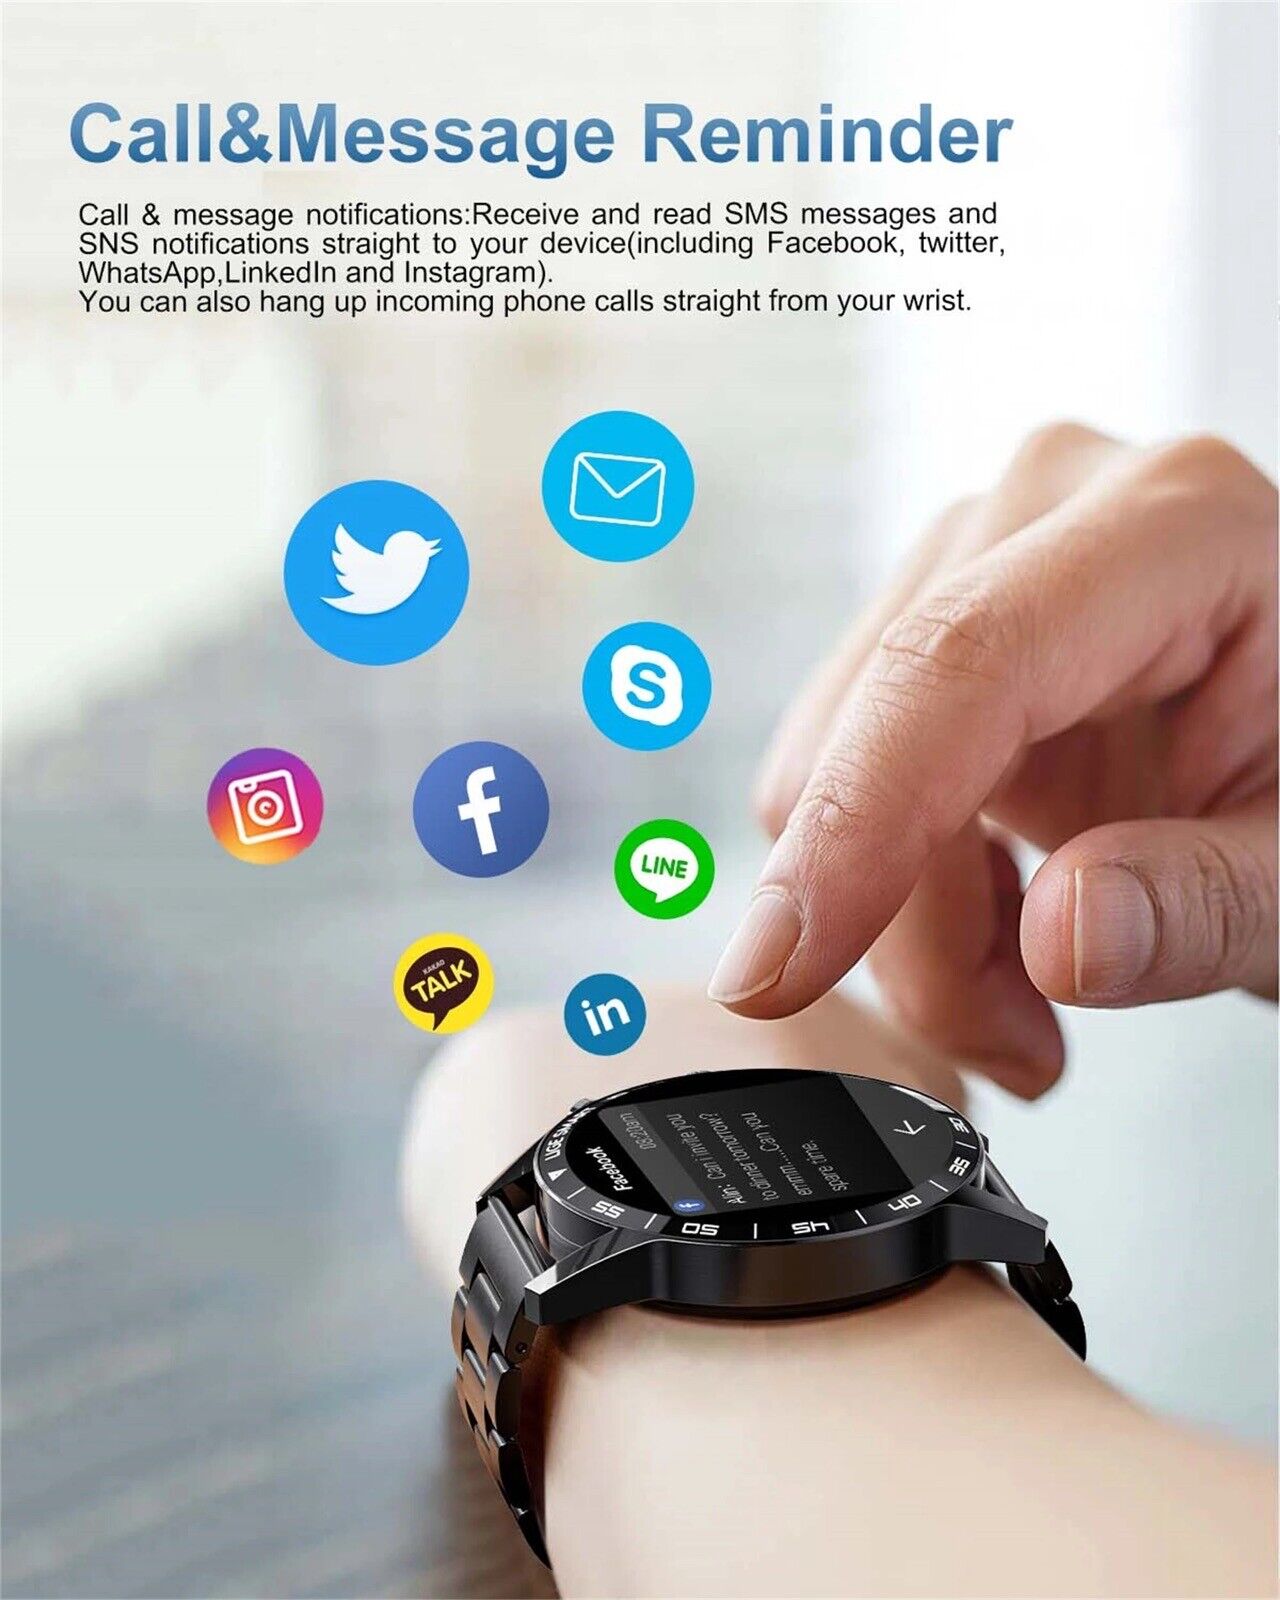 Lige Smartwatch ST2-B mit Fitness Tracker